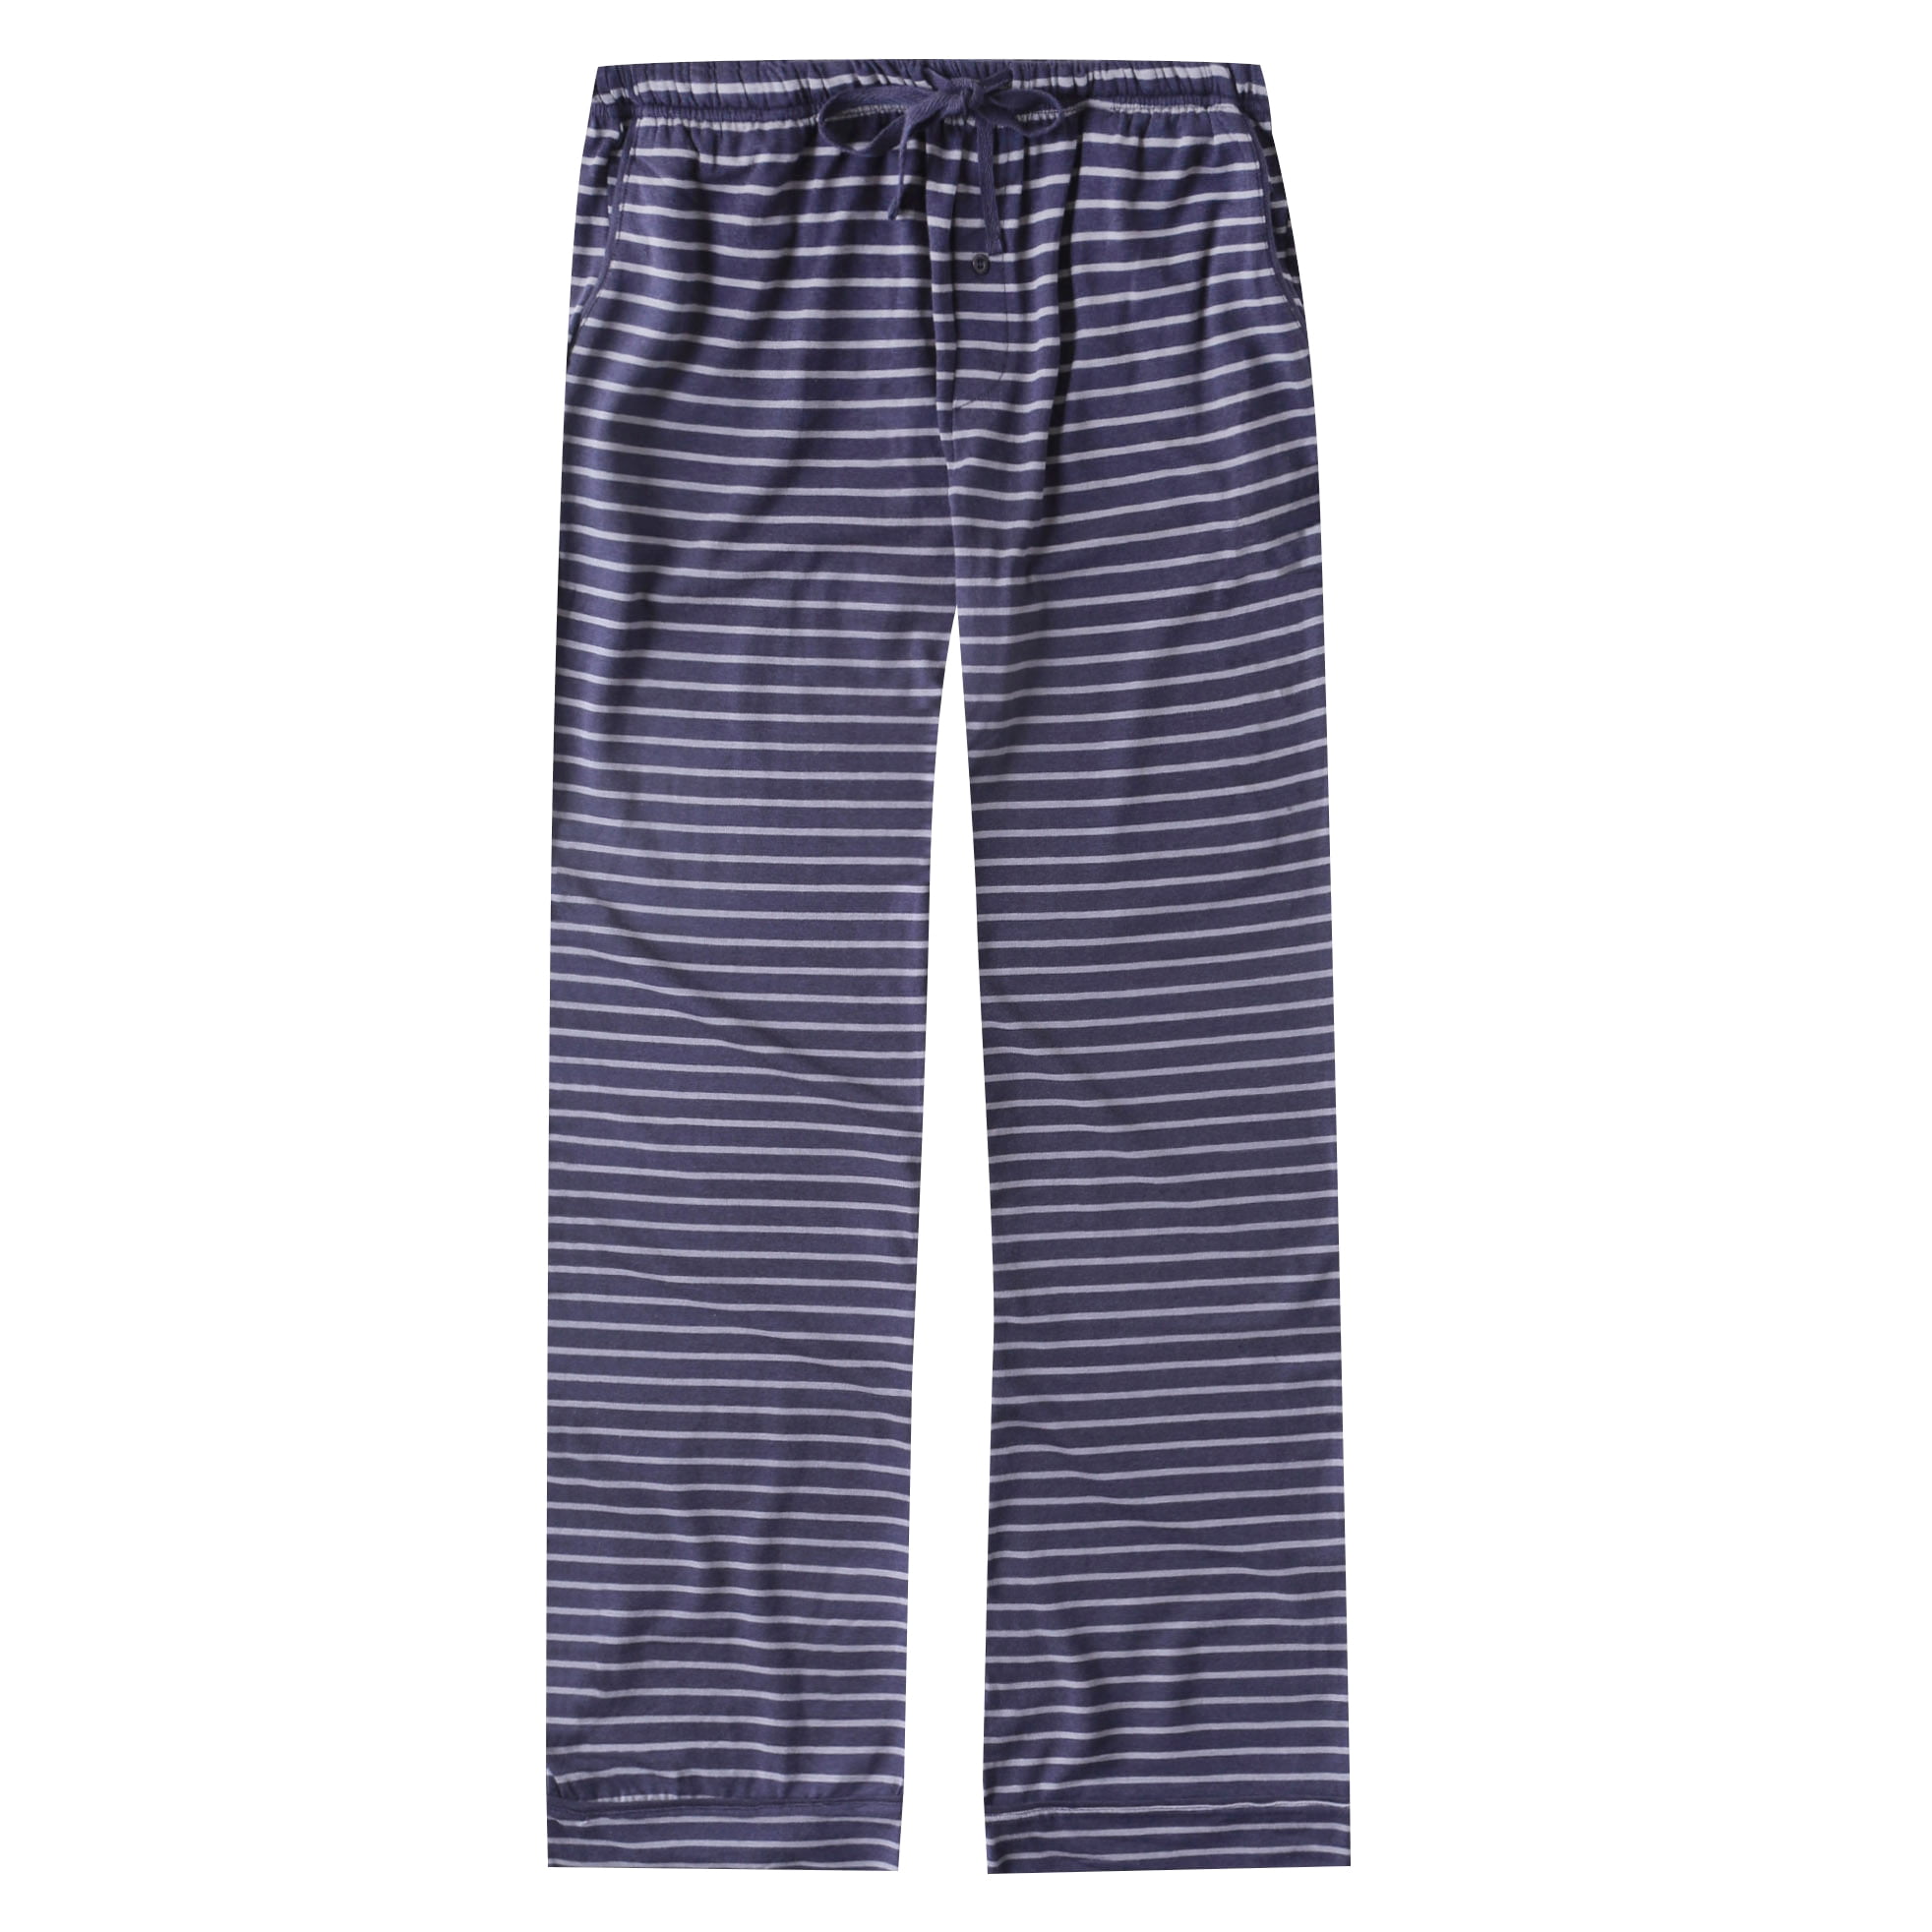 Twin Boat Women's Soft Knit Jersey Lounge Pants - Walmart.com